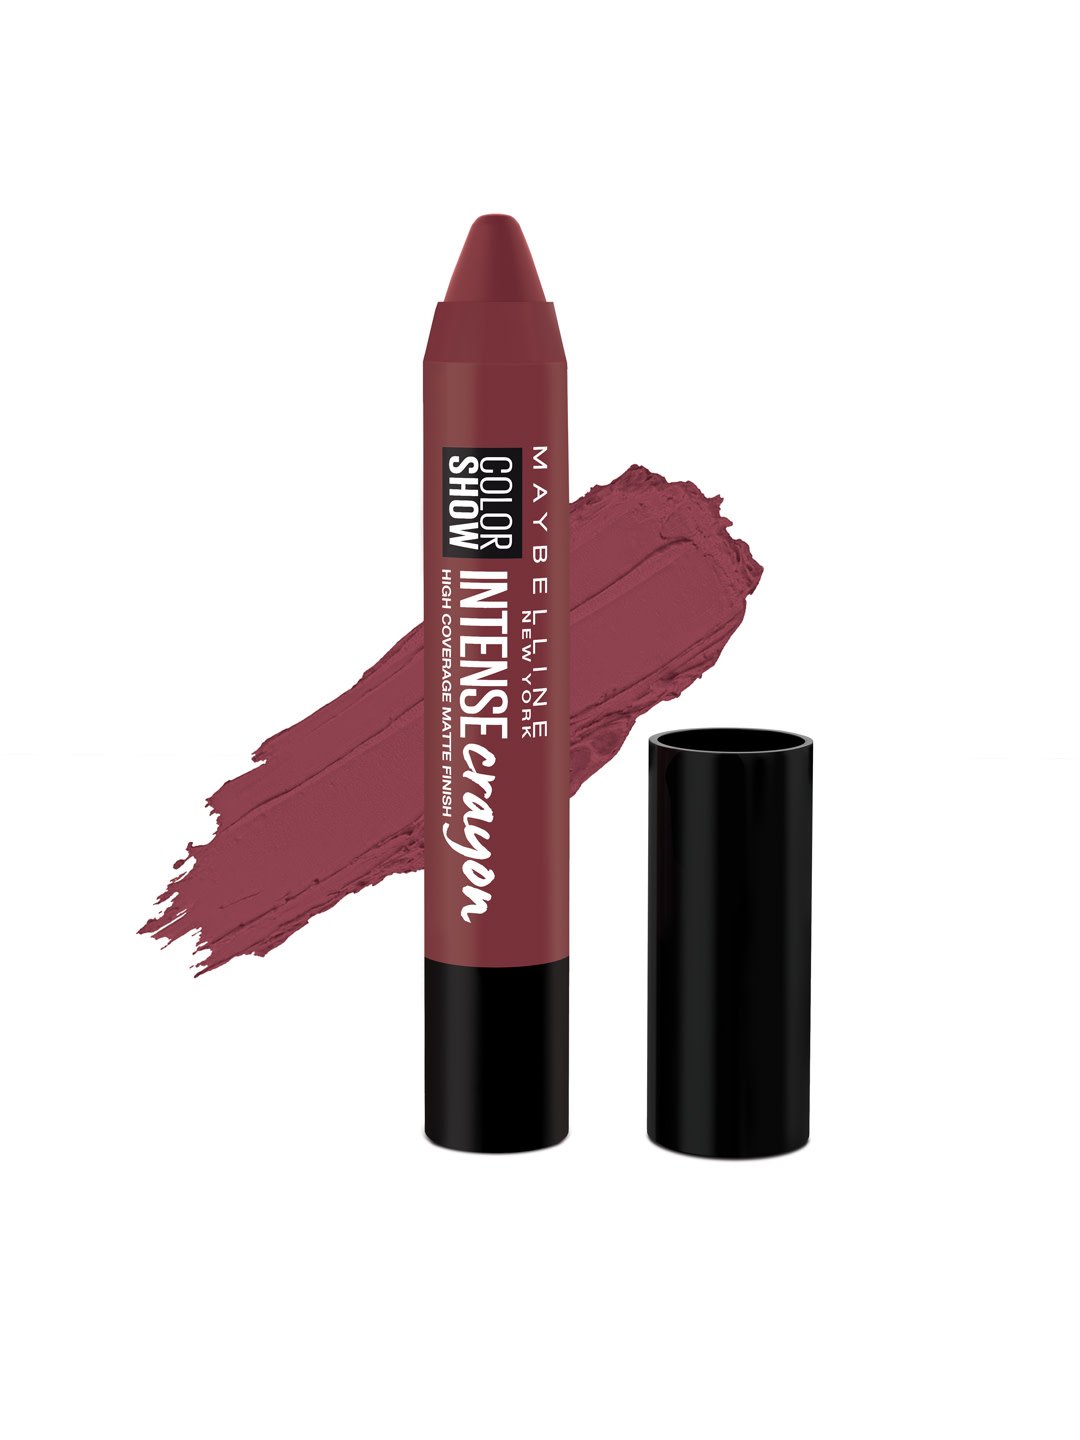 Maybelline Color Show Intense Crayon Lipstick - Passionate Plum M 404 3.5 g